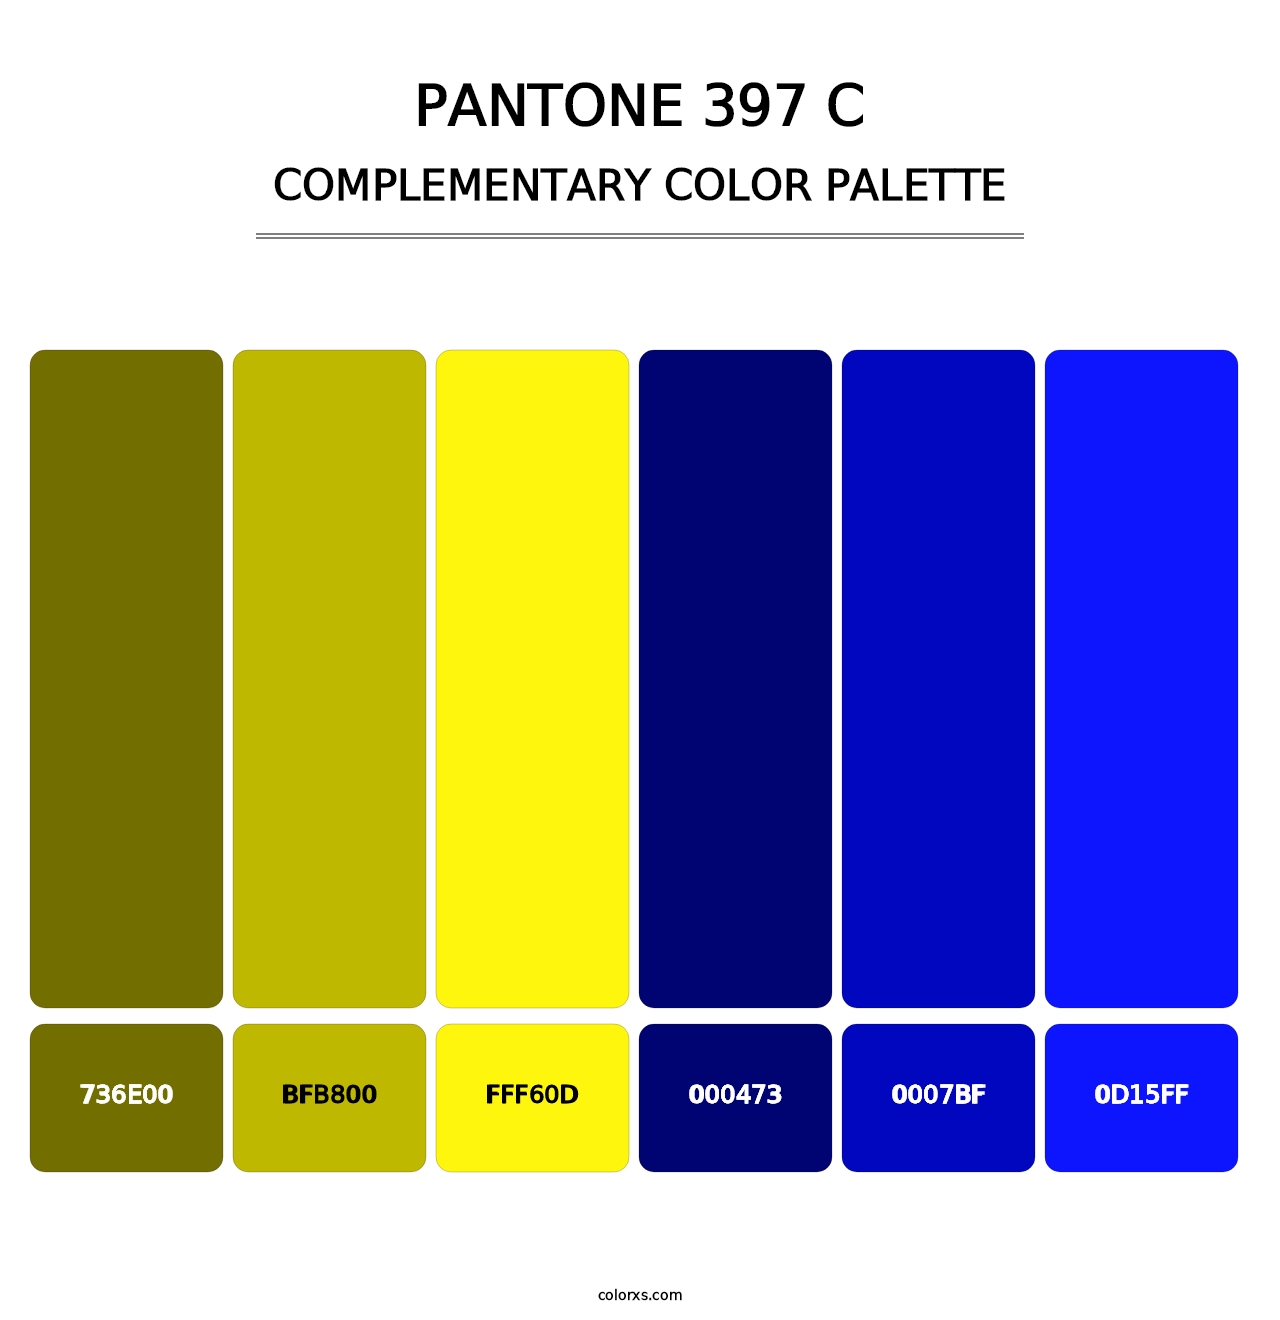 PANTONE 397 C - Complementary Color Palette